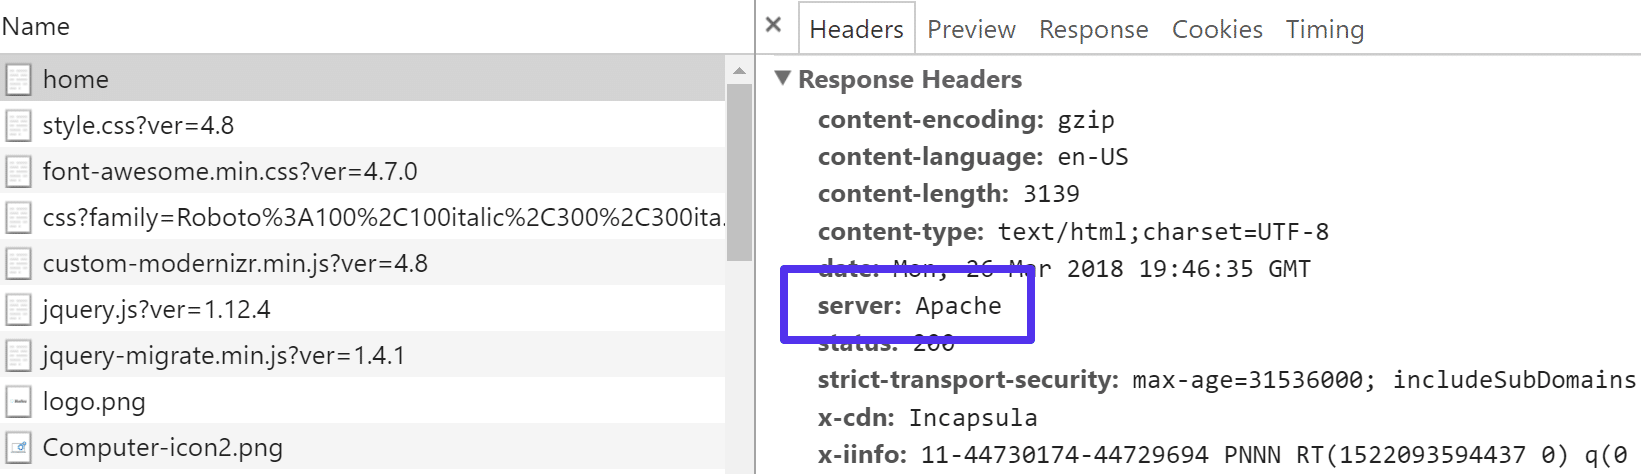 Apache HTTP-Header